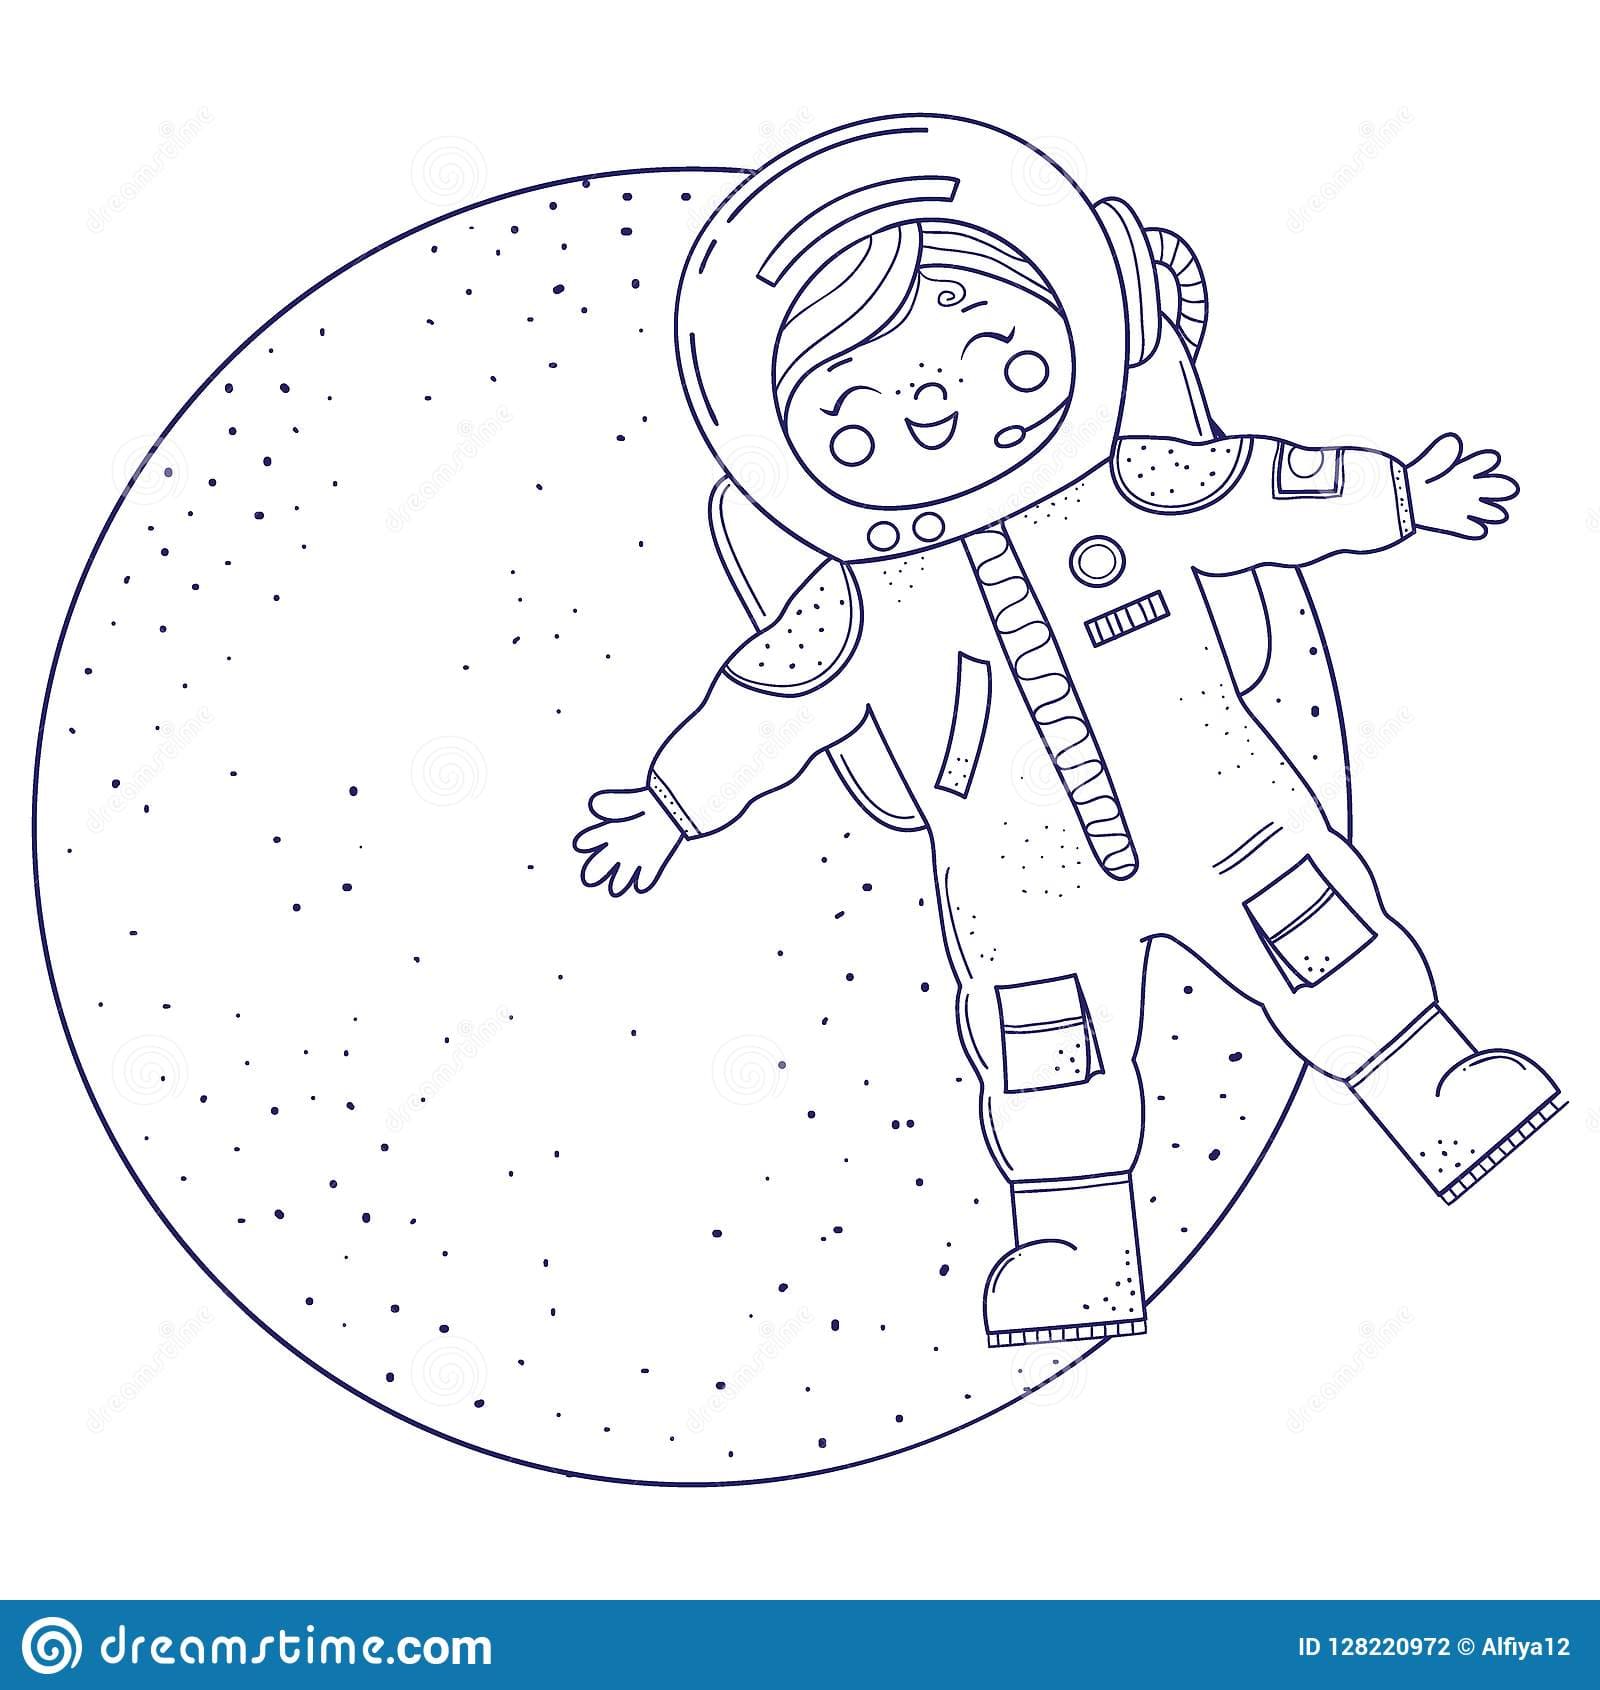 Cartoon vector illustration of an astronaut